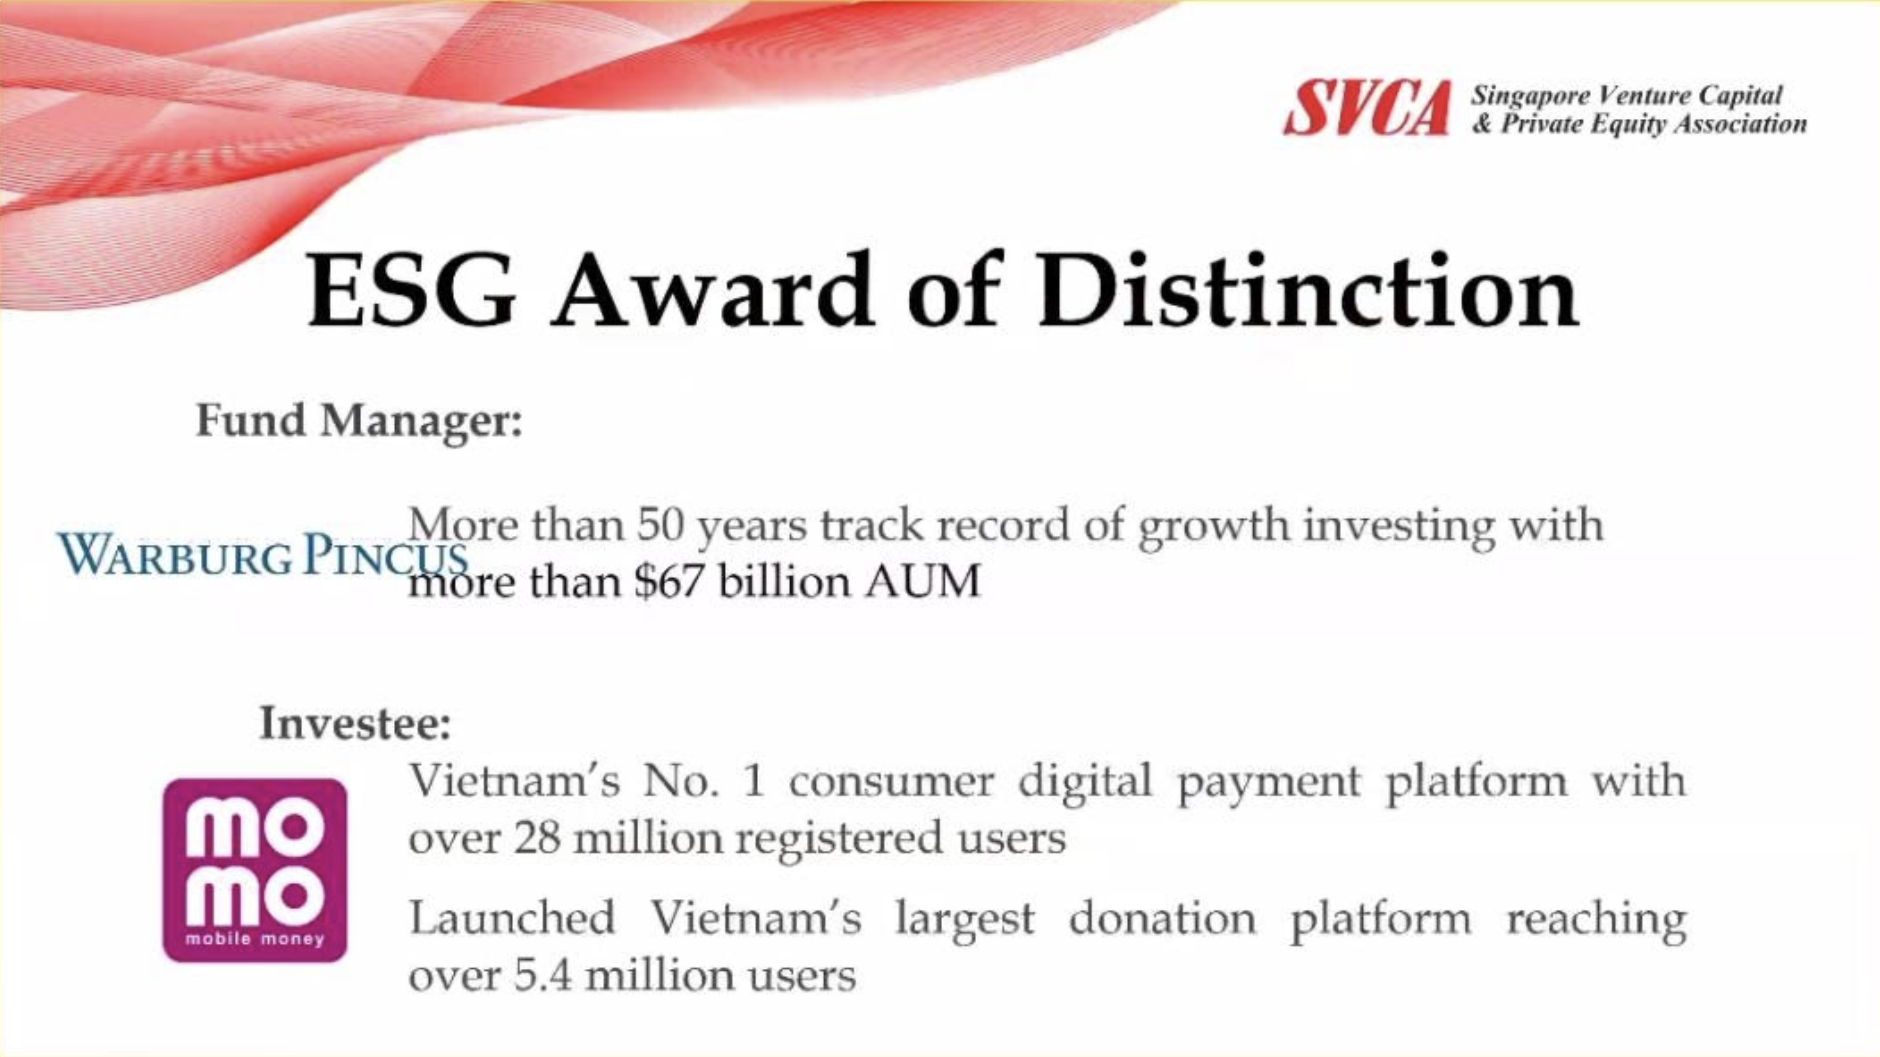 esg-award-of-distinction-2021-1635239104.png